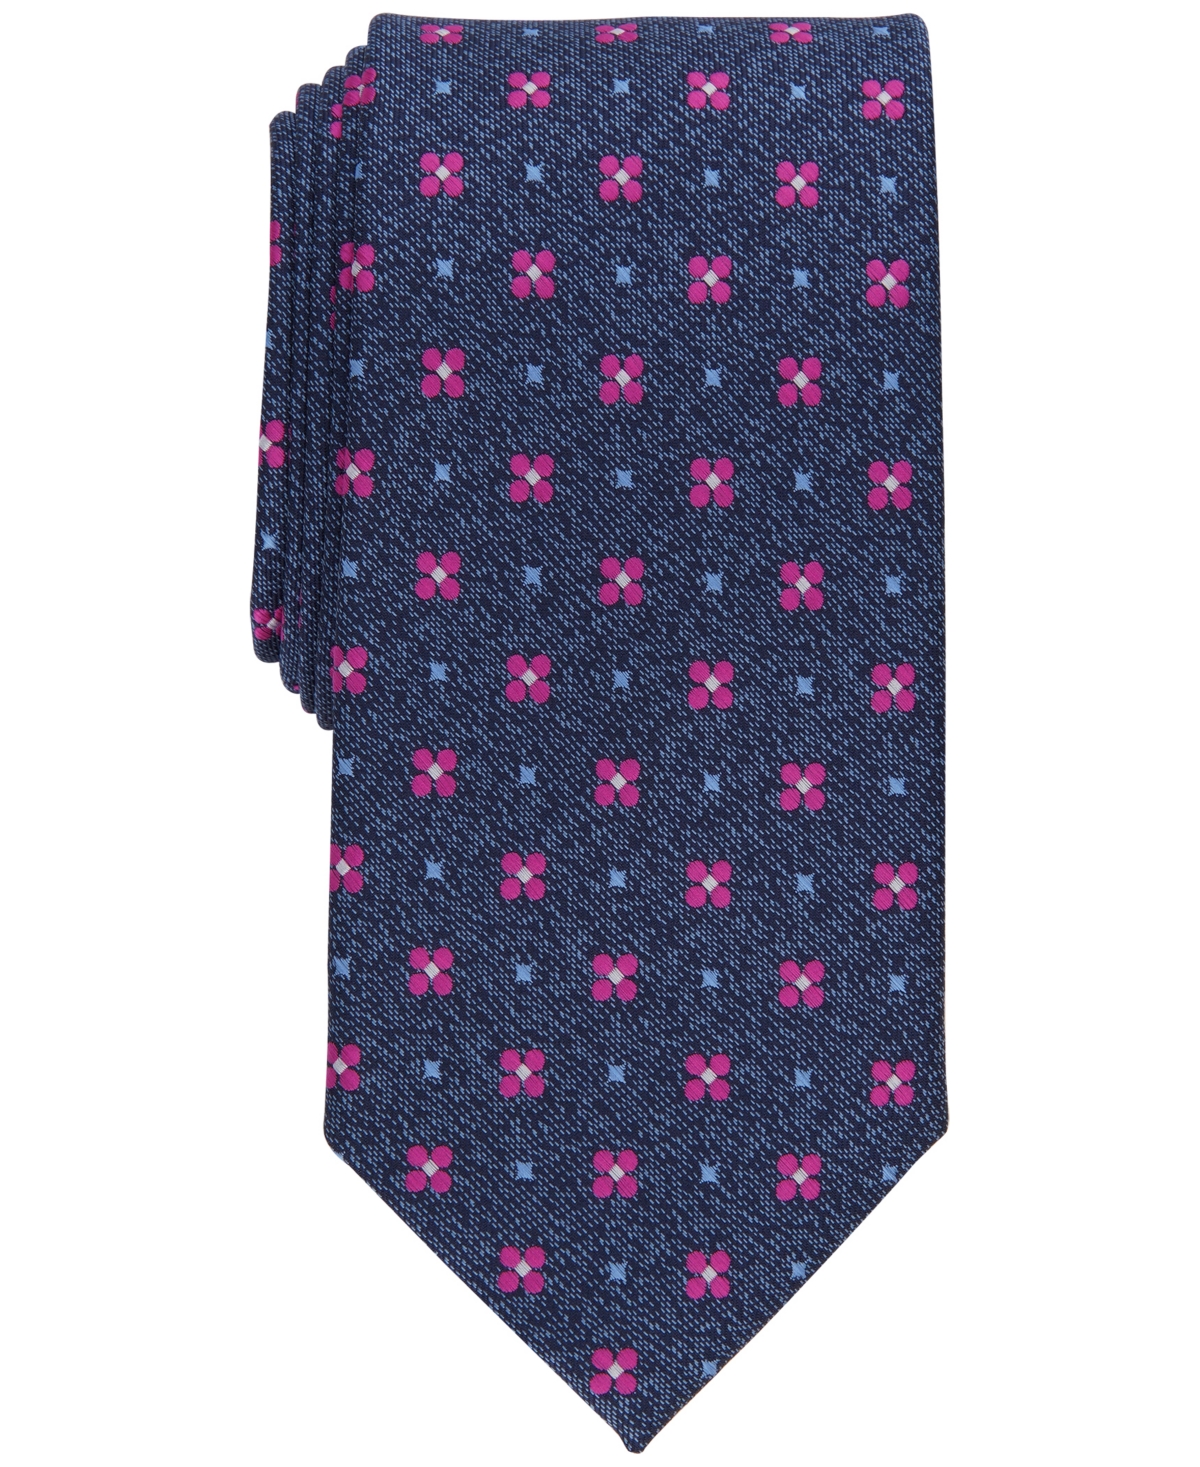 Men's Ridgeway Tie, Created for Macy's - Rose